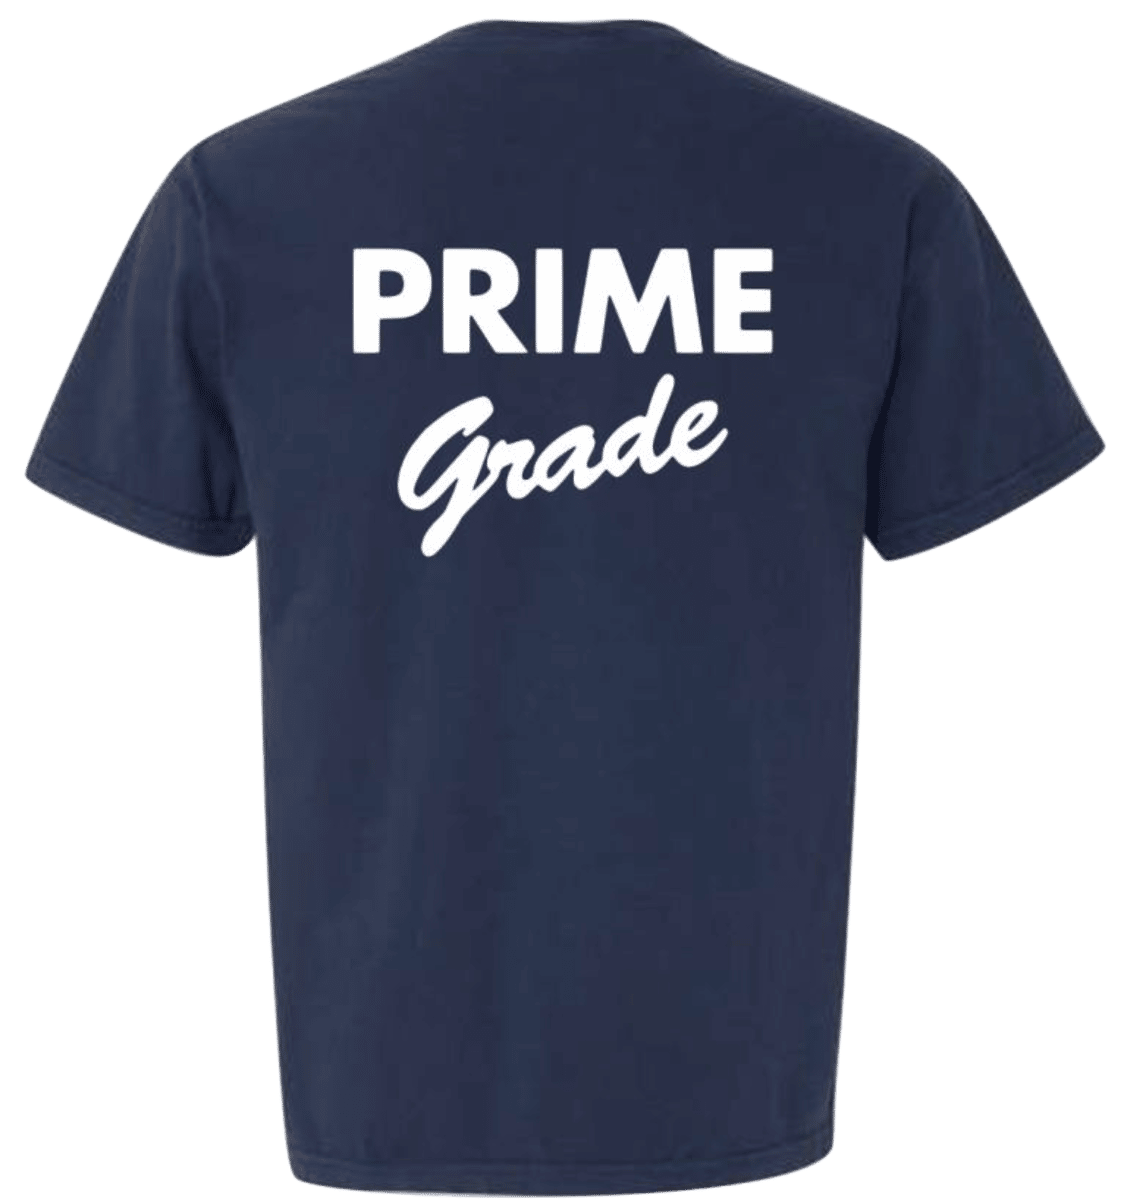 "Prime Grade" back of blue shirt